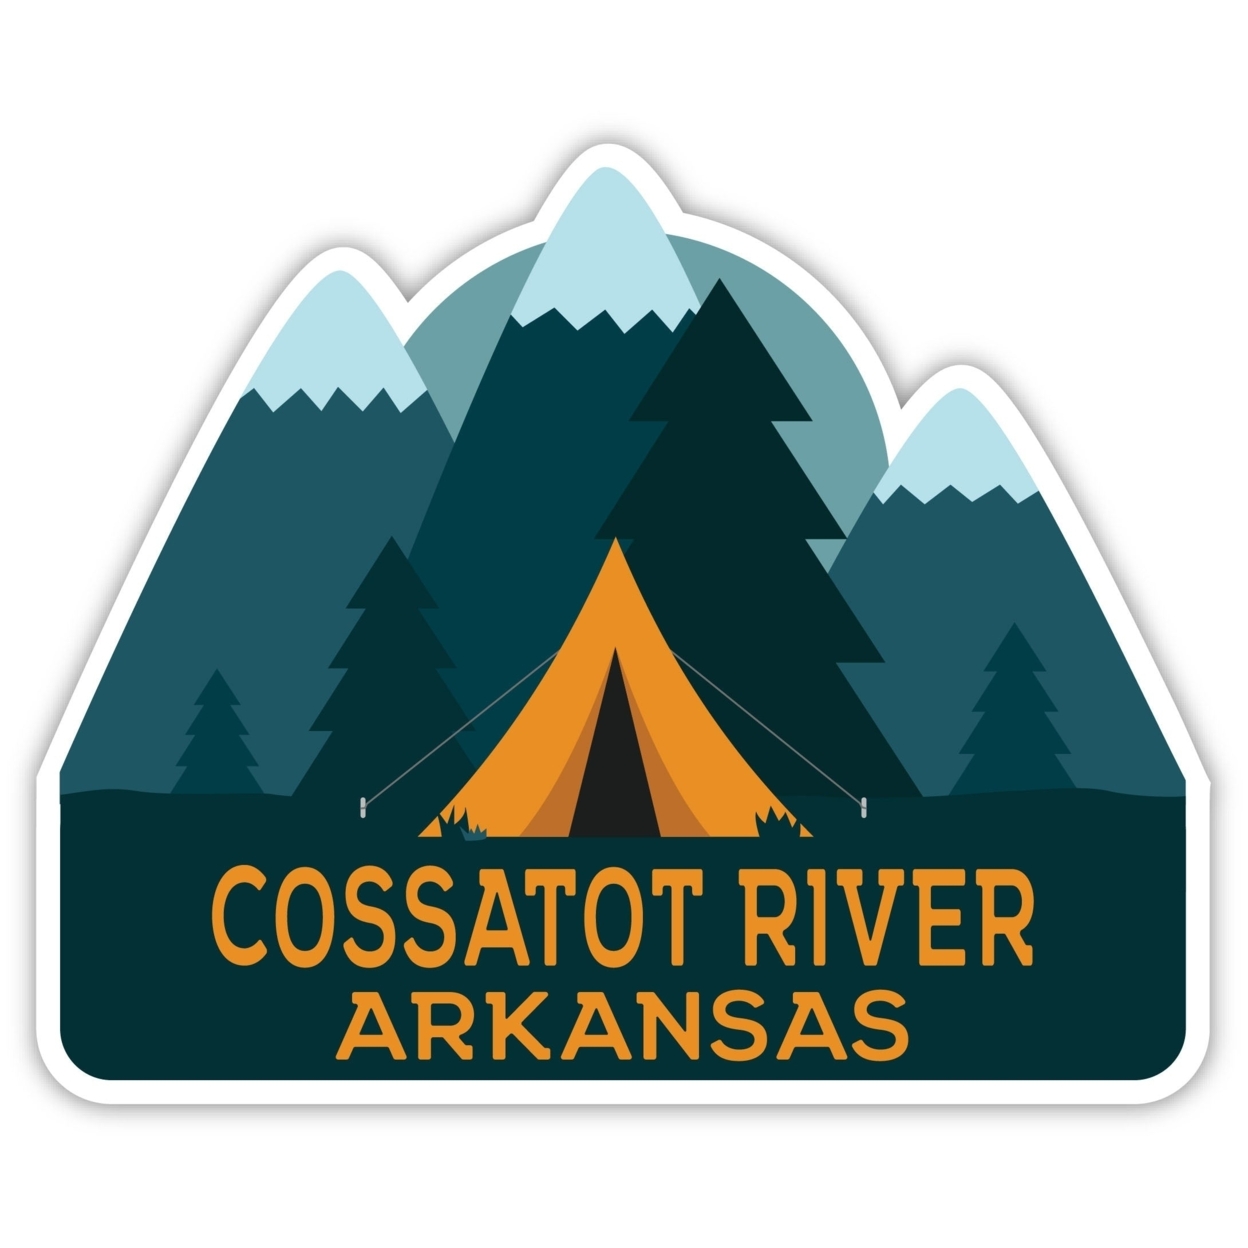 Cossatot River Arkansas Souvenir Decorative Stickers (Choose Theme And Size) - 4-Pack, 4-Inch, Tent